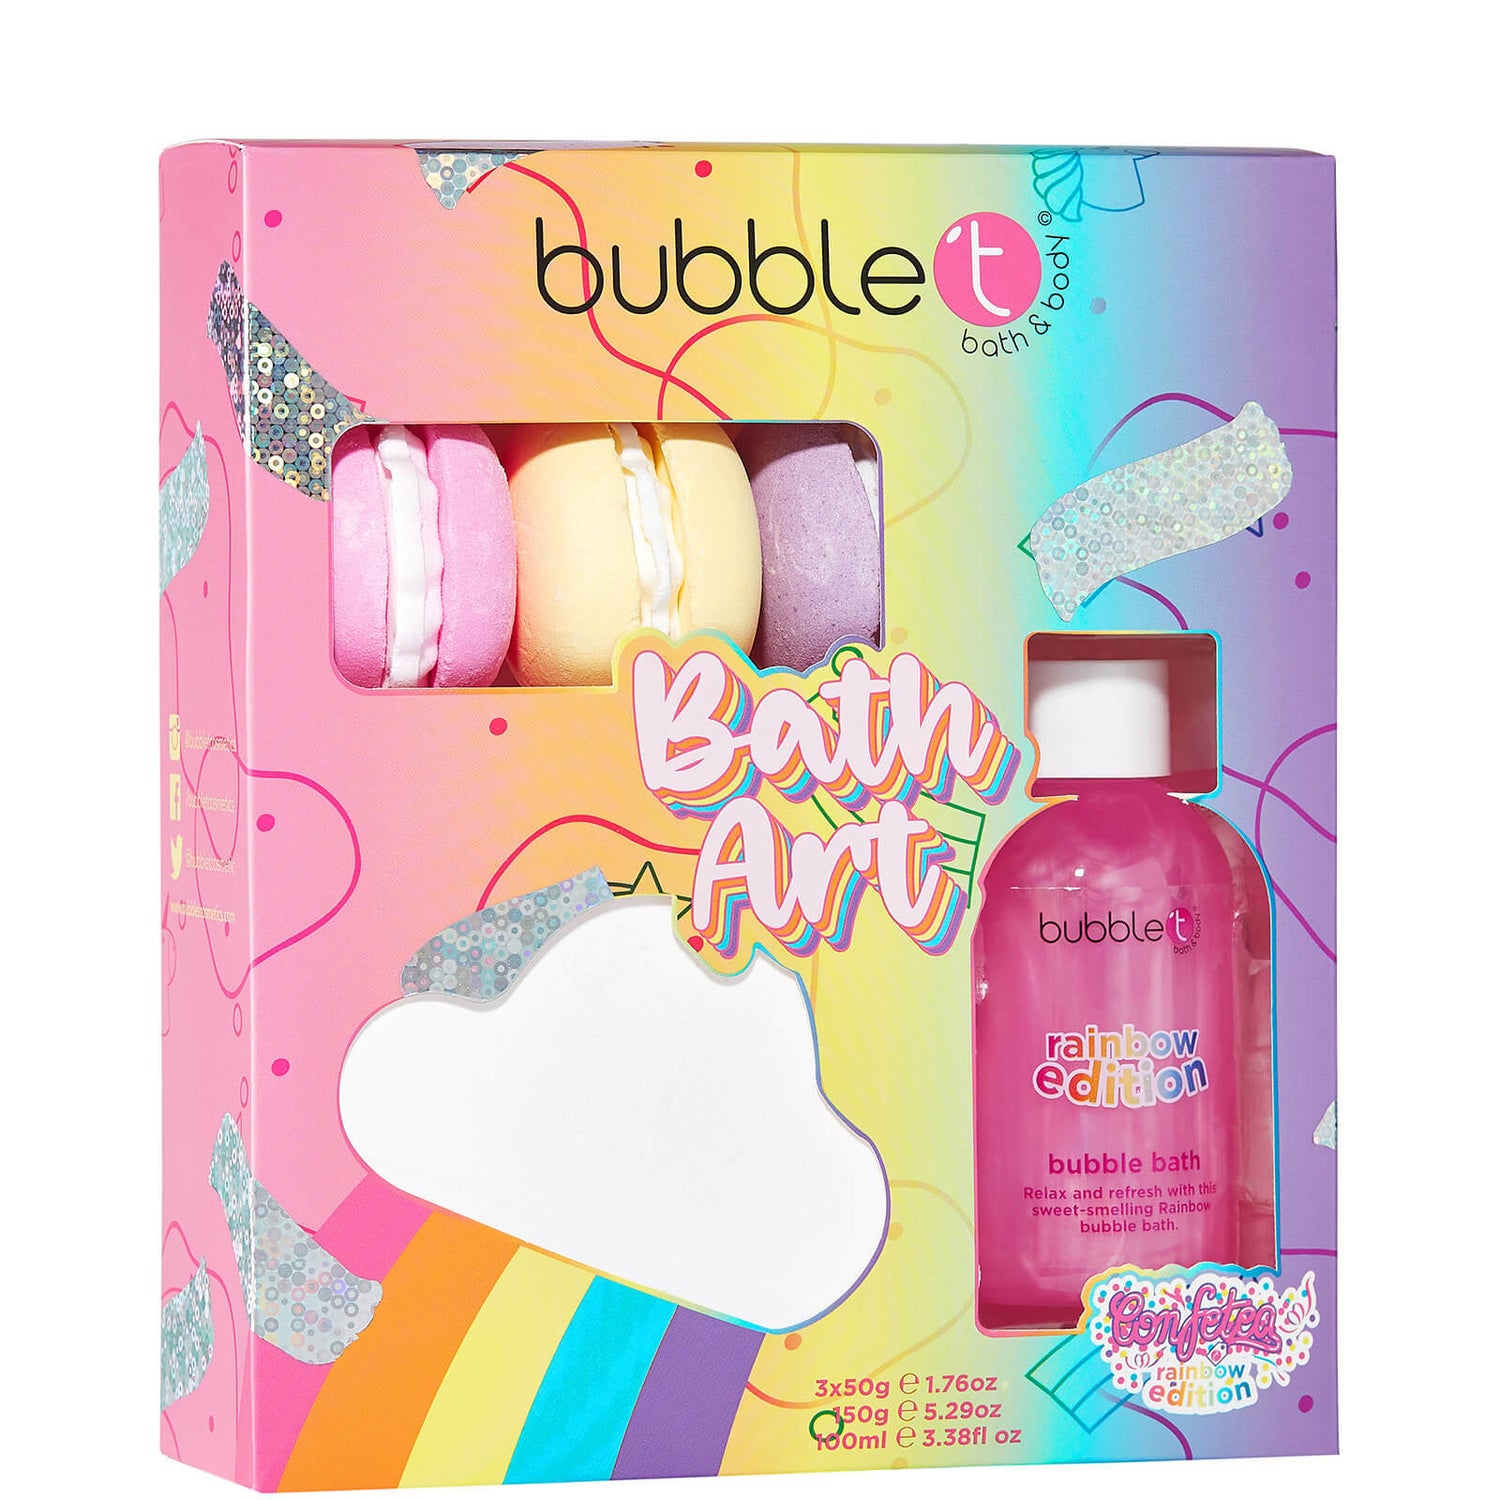 Bubble T Cosmetics Bath Art Fizzer Gift